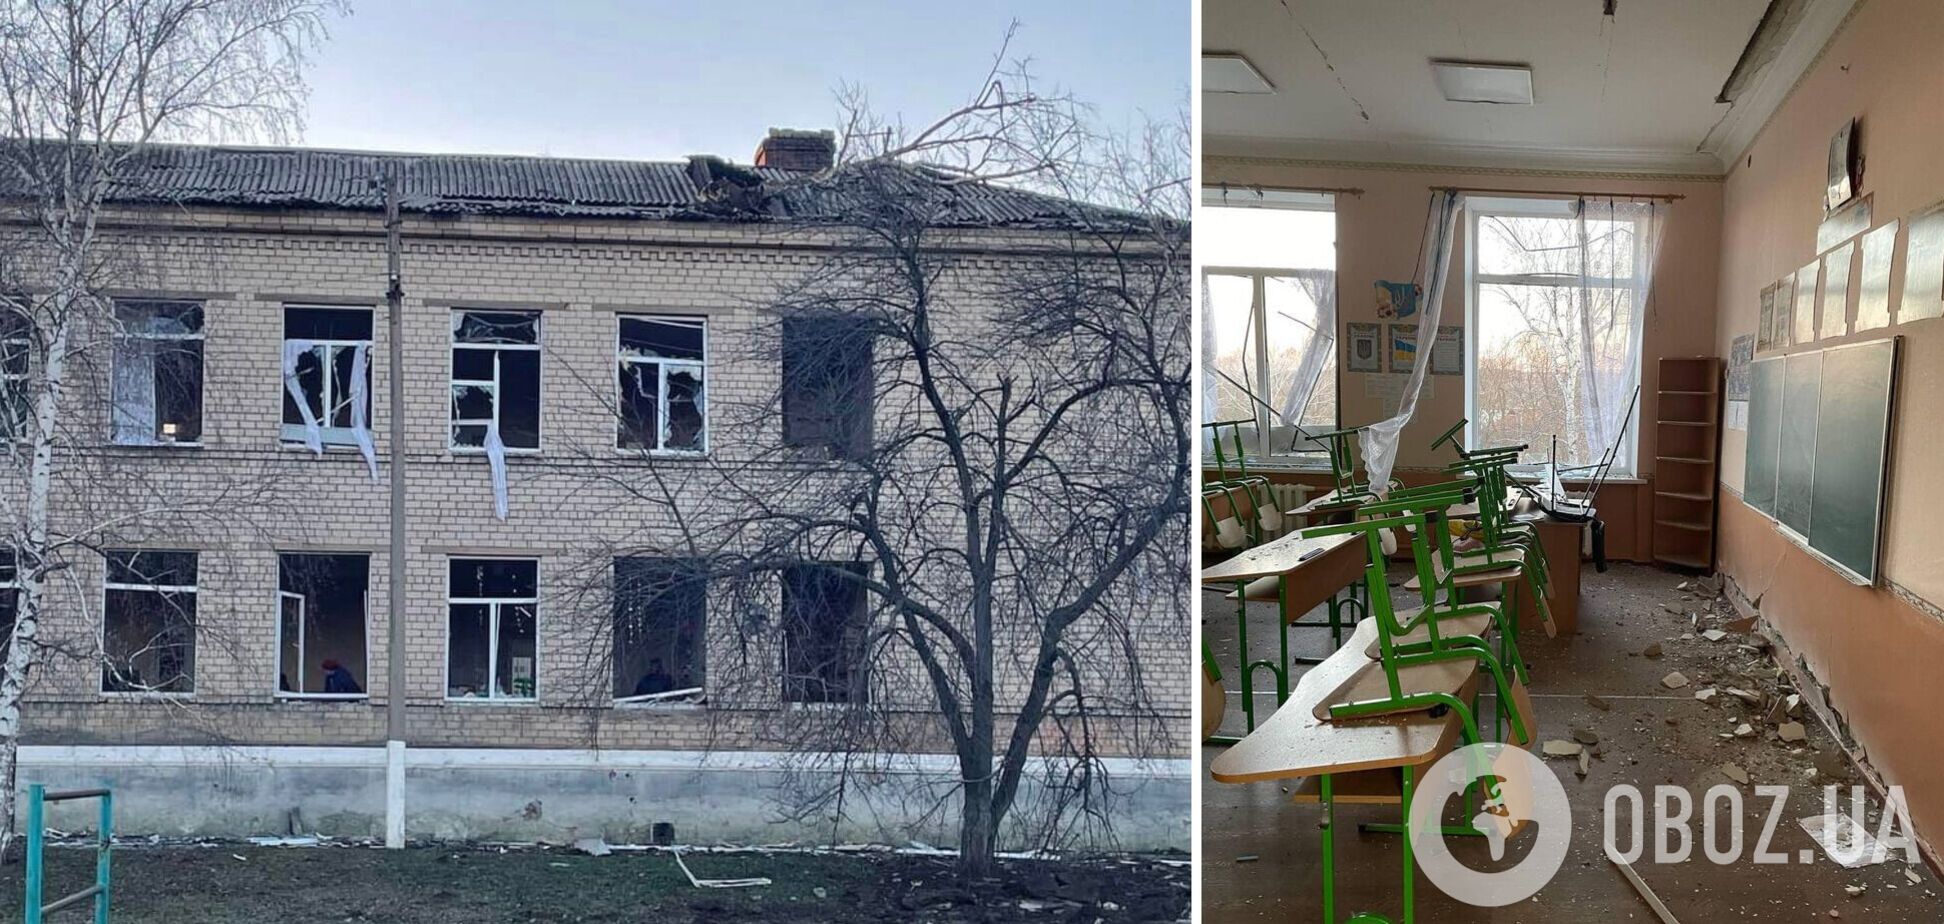 Войска РФ ударили ракетами по школе в Краматорске, где обустроили 'Пункт несокрушимости'. Фото и видео